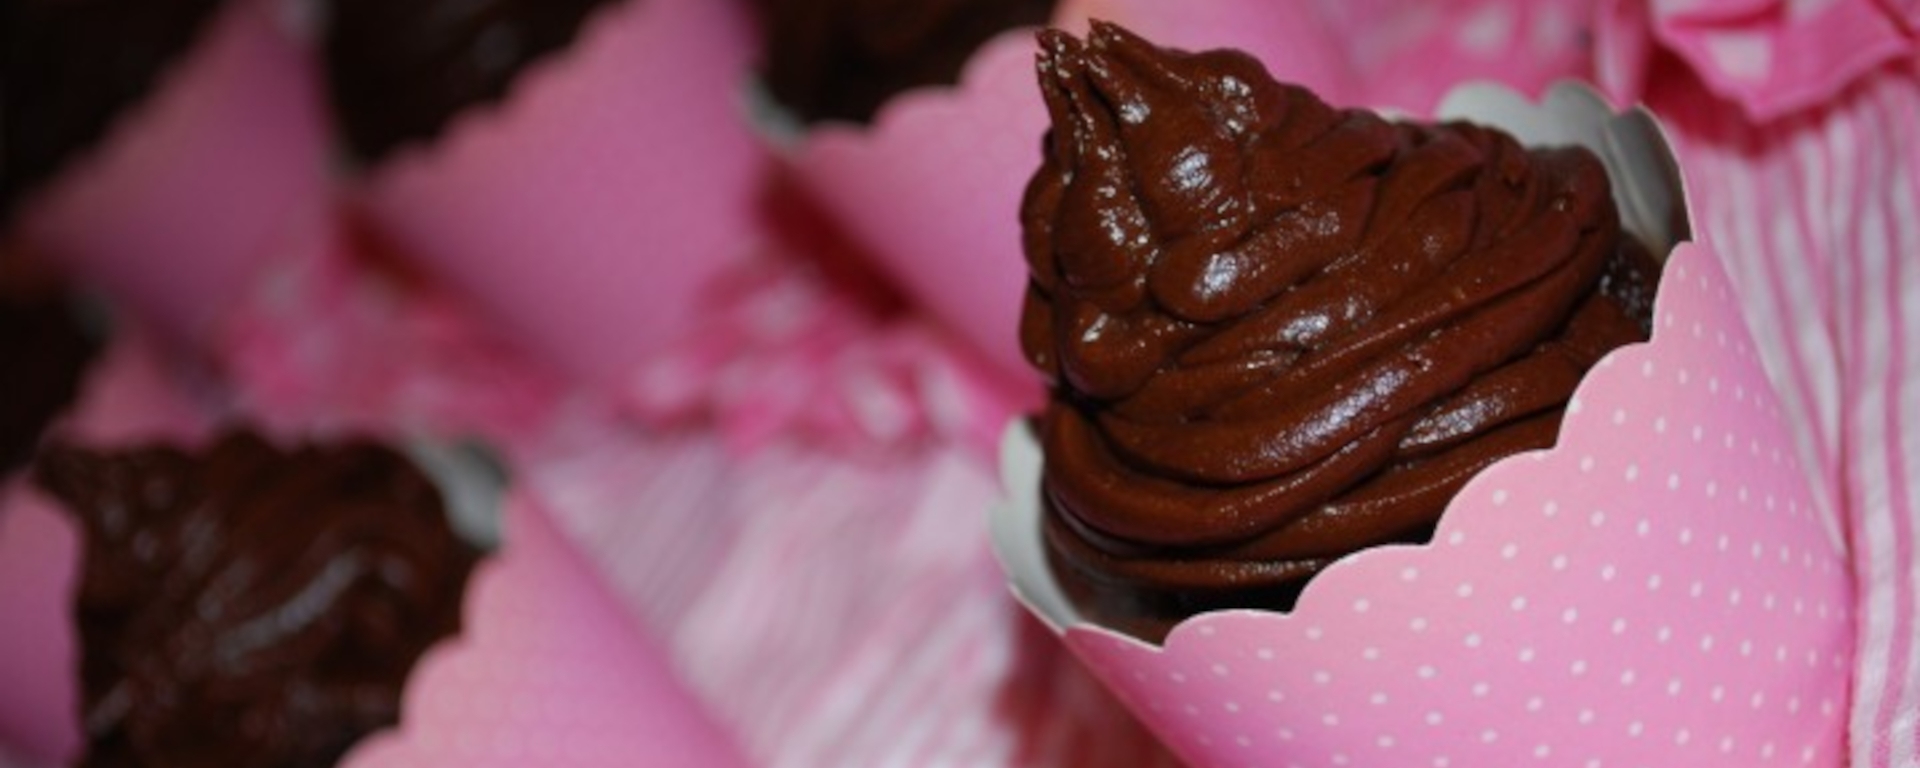 LuvMyRecipe.com - Chocolate Cupcakes featured